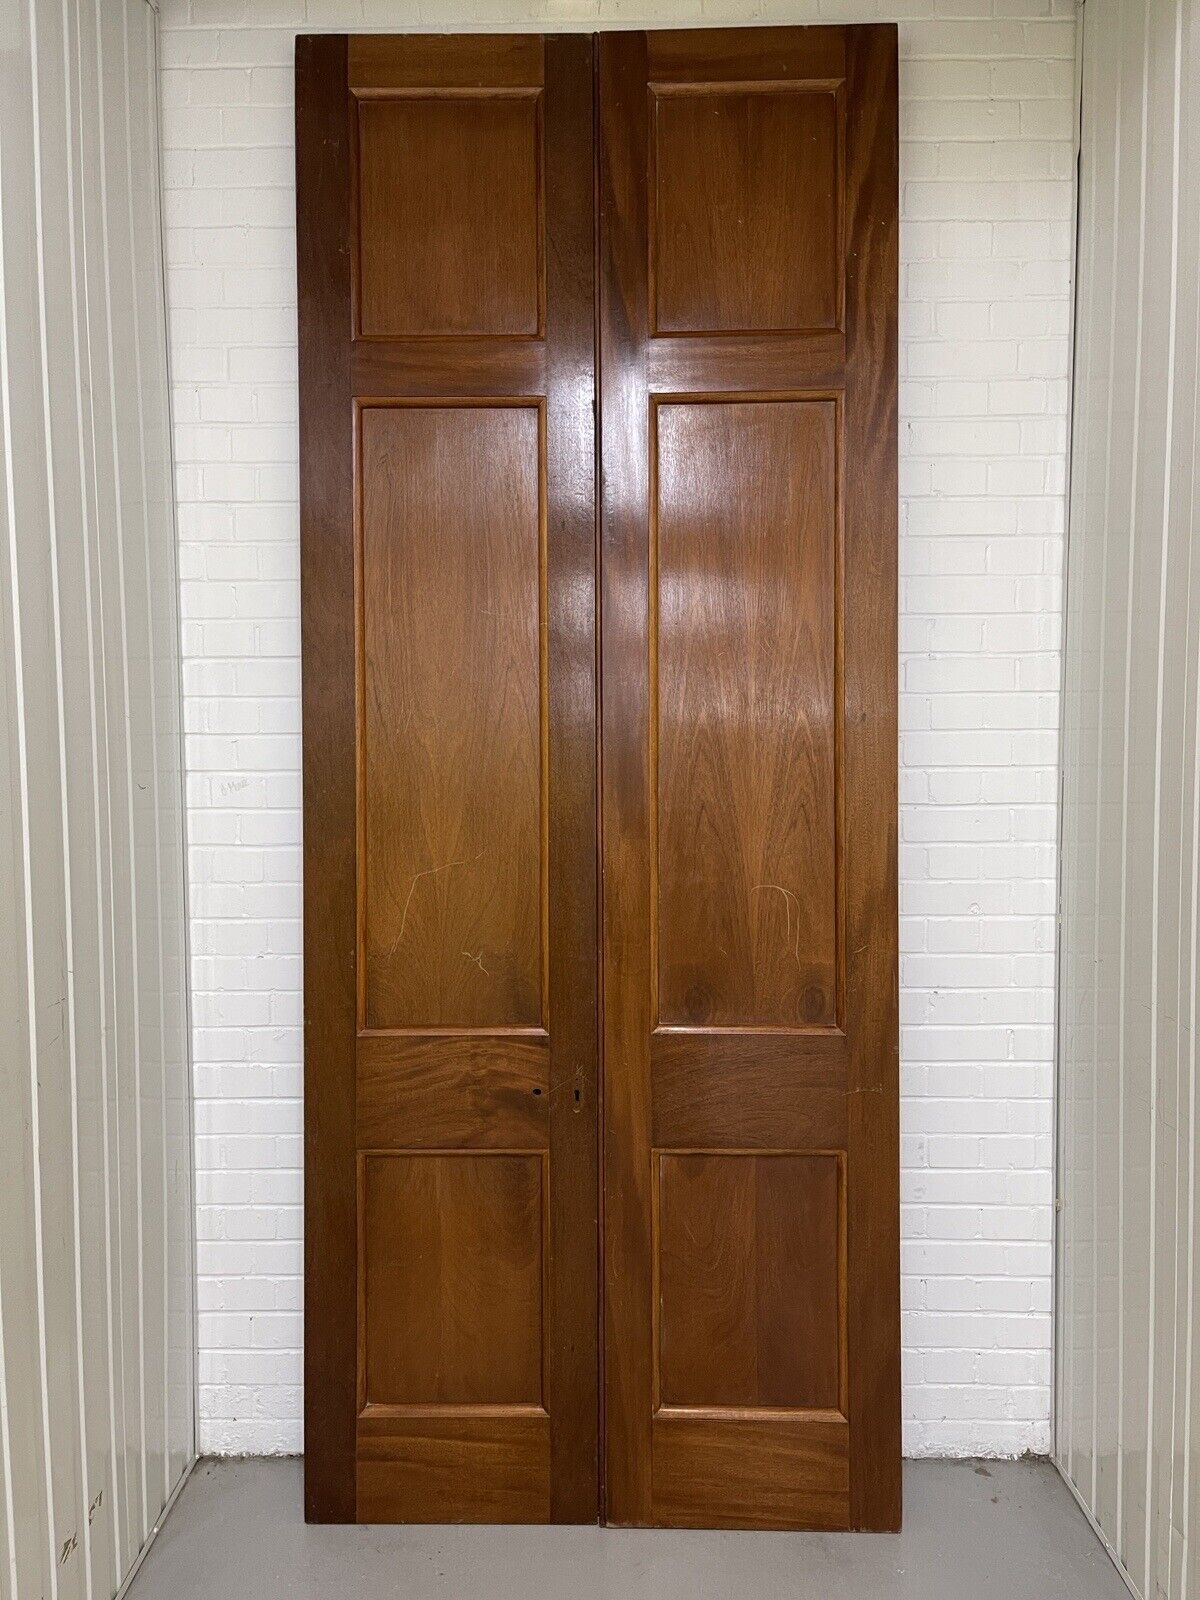 Reclaimed Large French Mahogany  Wooden Double Doors Provenance Knightsbridge